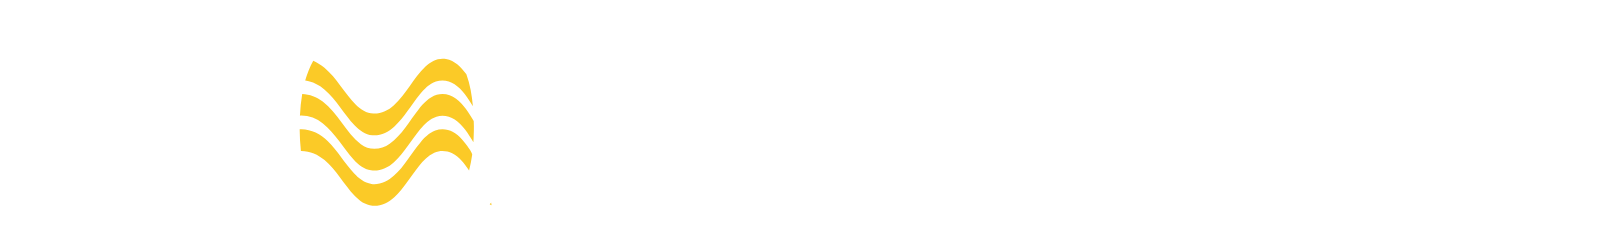 Fortis Logo groß für dunkle Hintergründe (transparentes PNG)